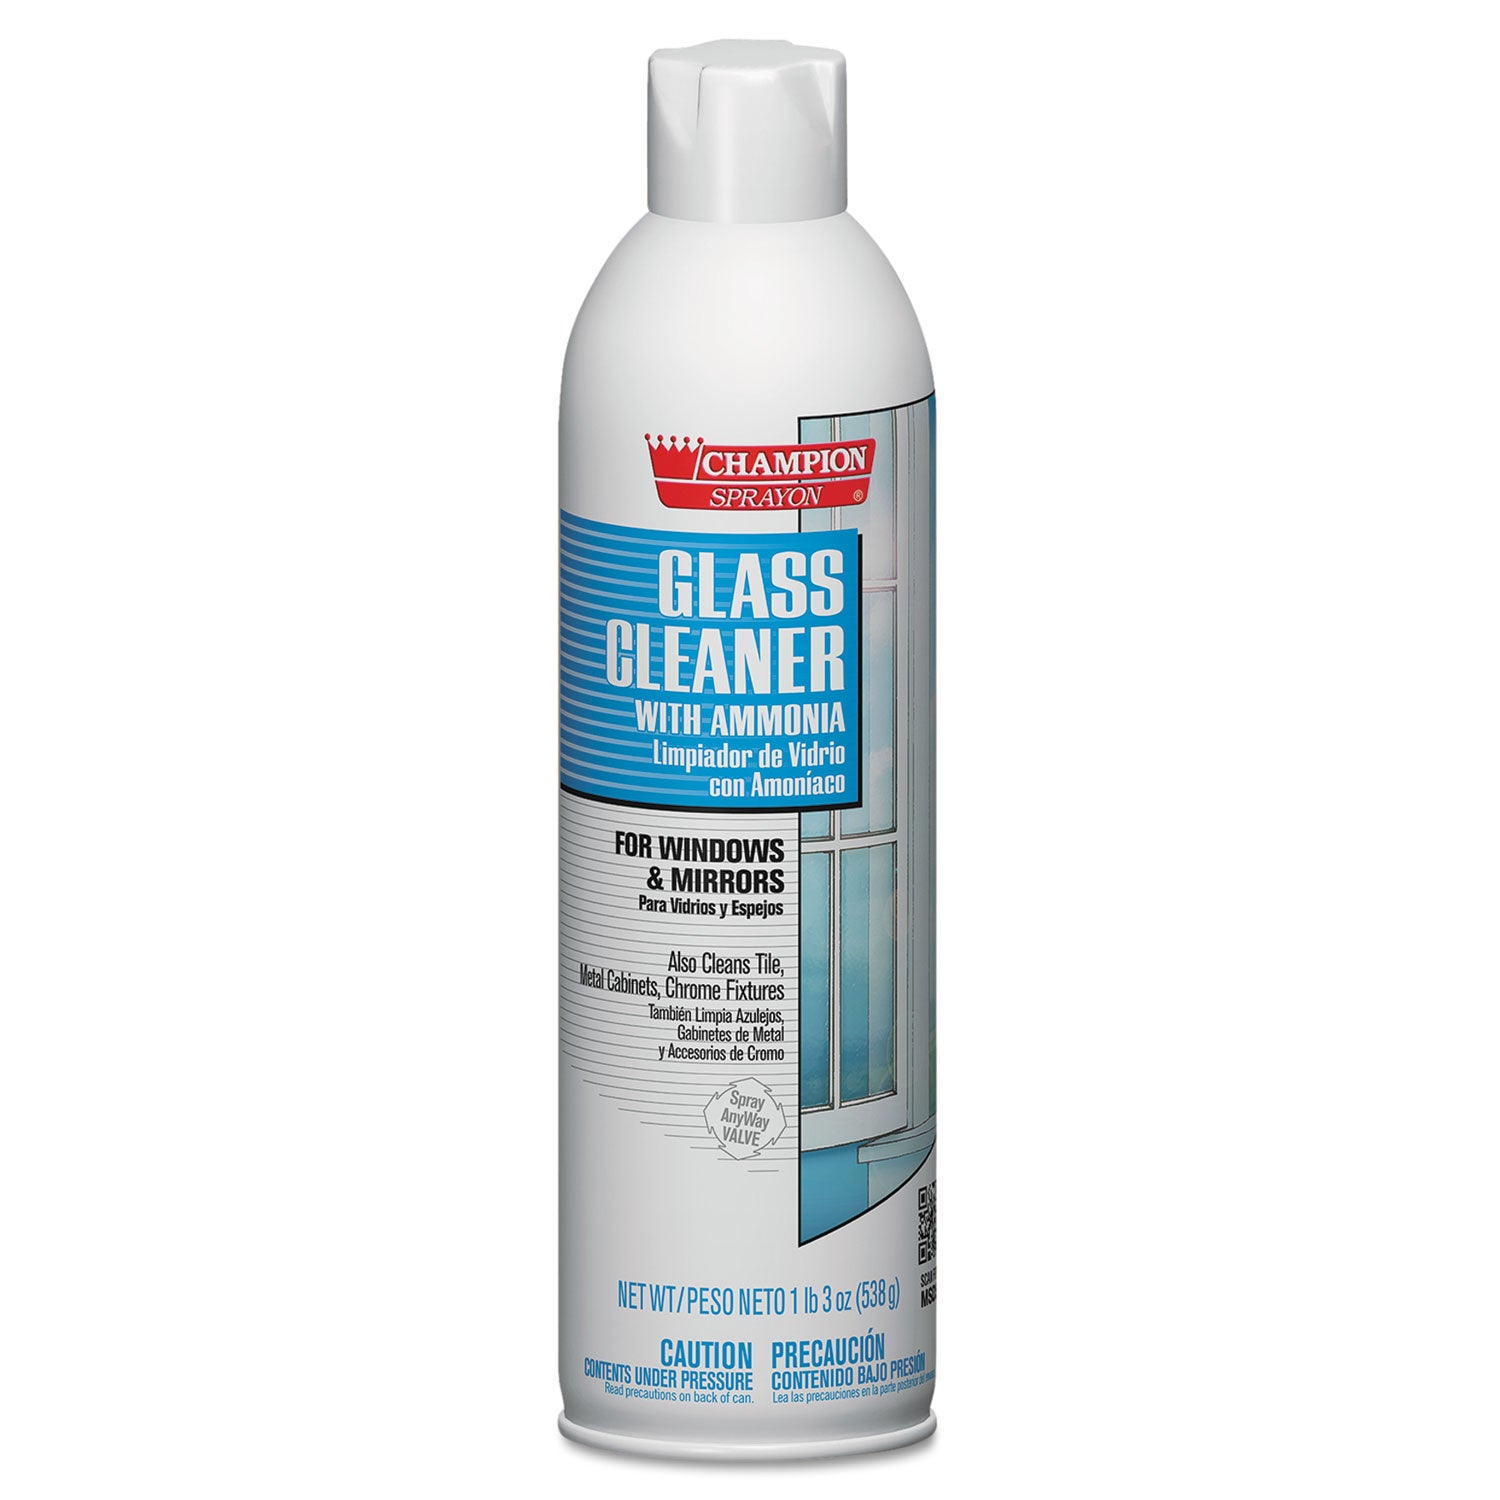 Champion Sprayon Glass Cleaner with Ammonia, 19 oz Aerosol Spray, 12/Carton - 2